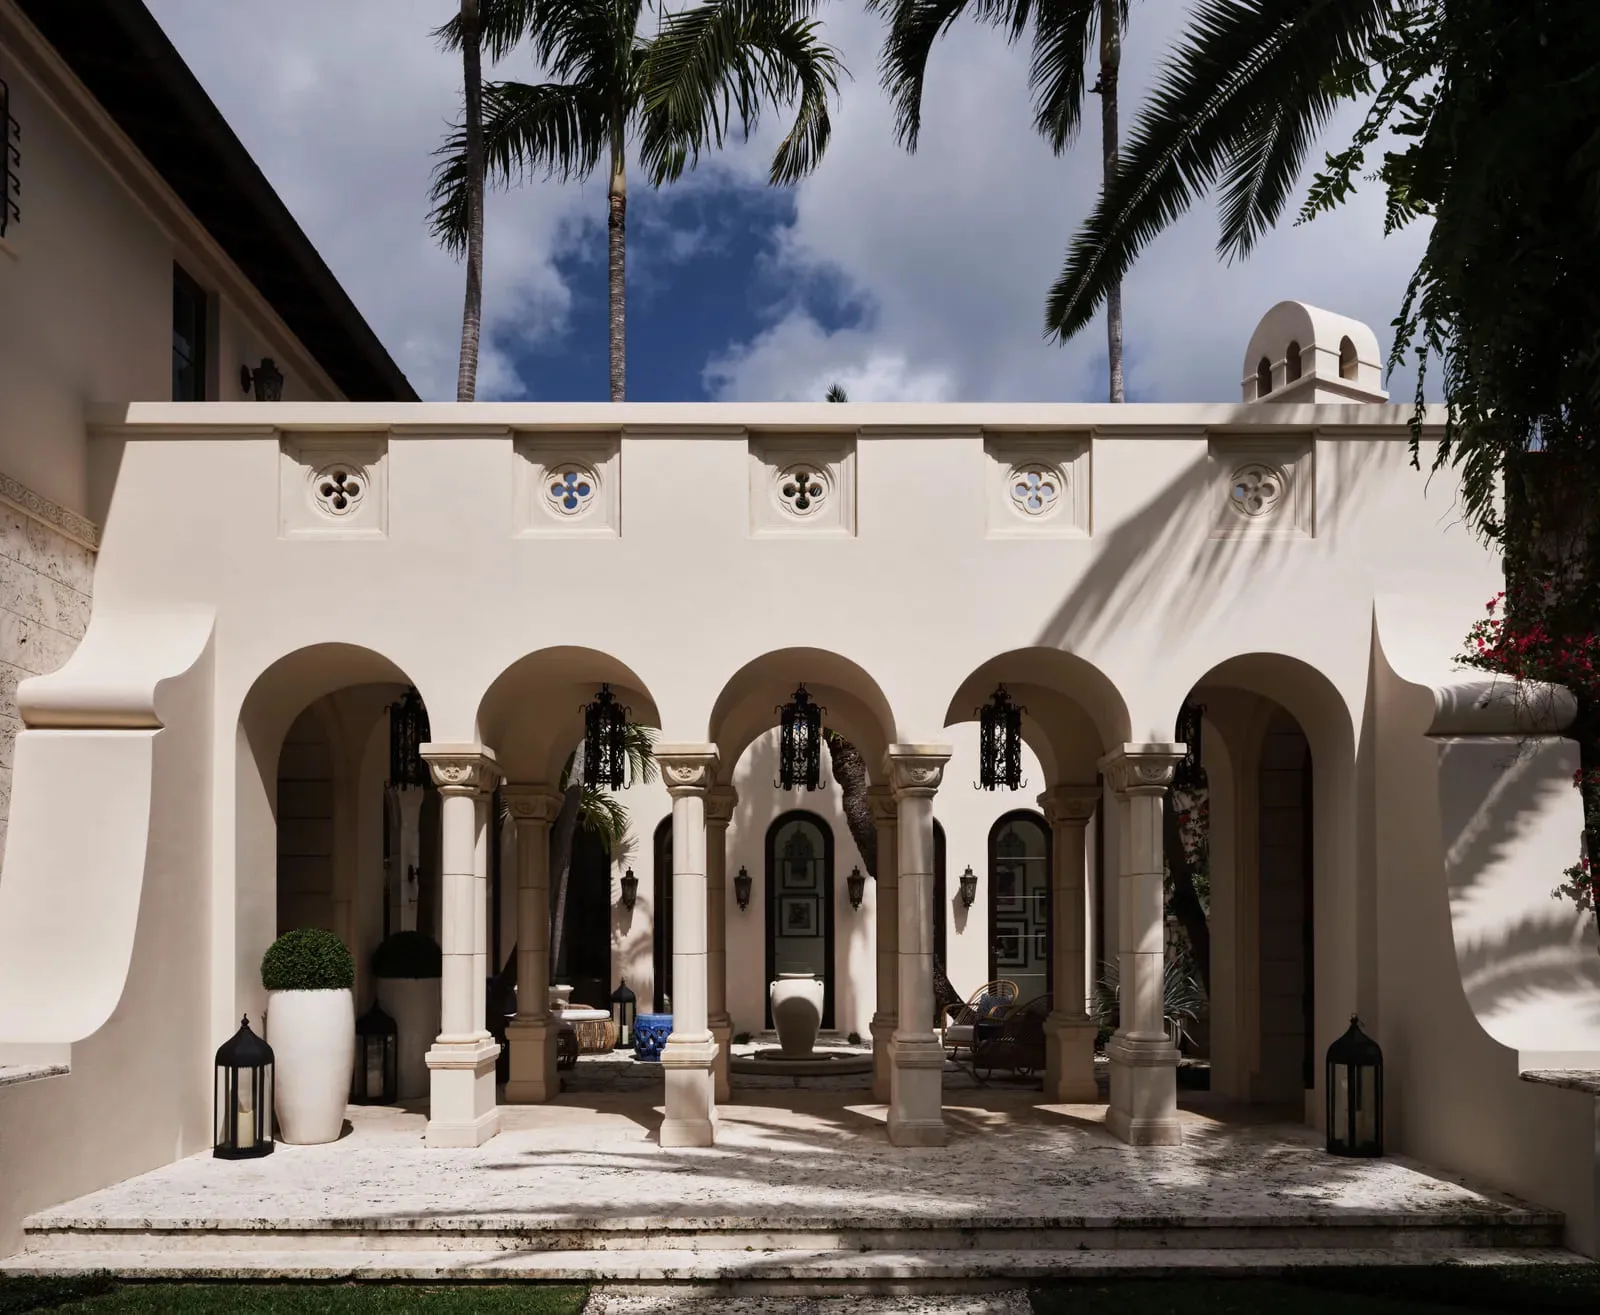 Tommy Hilfiger Florida Mansion - The Hilfigers' Colorful Mansion